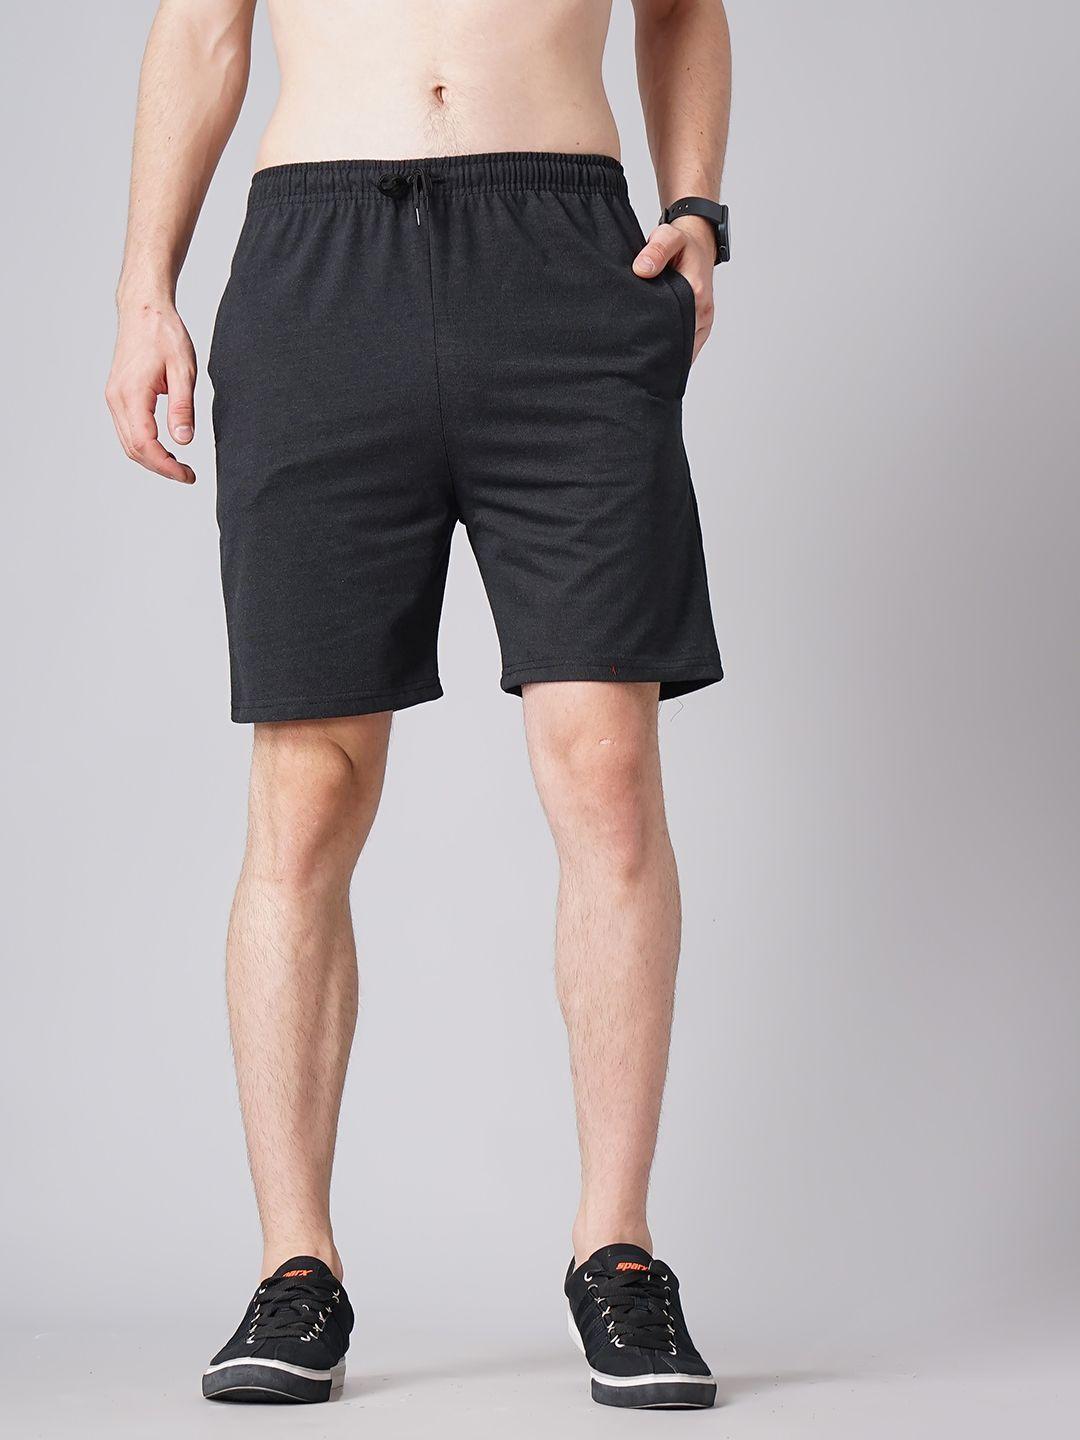 madsto plus size men slim fit cotton sports shorts